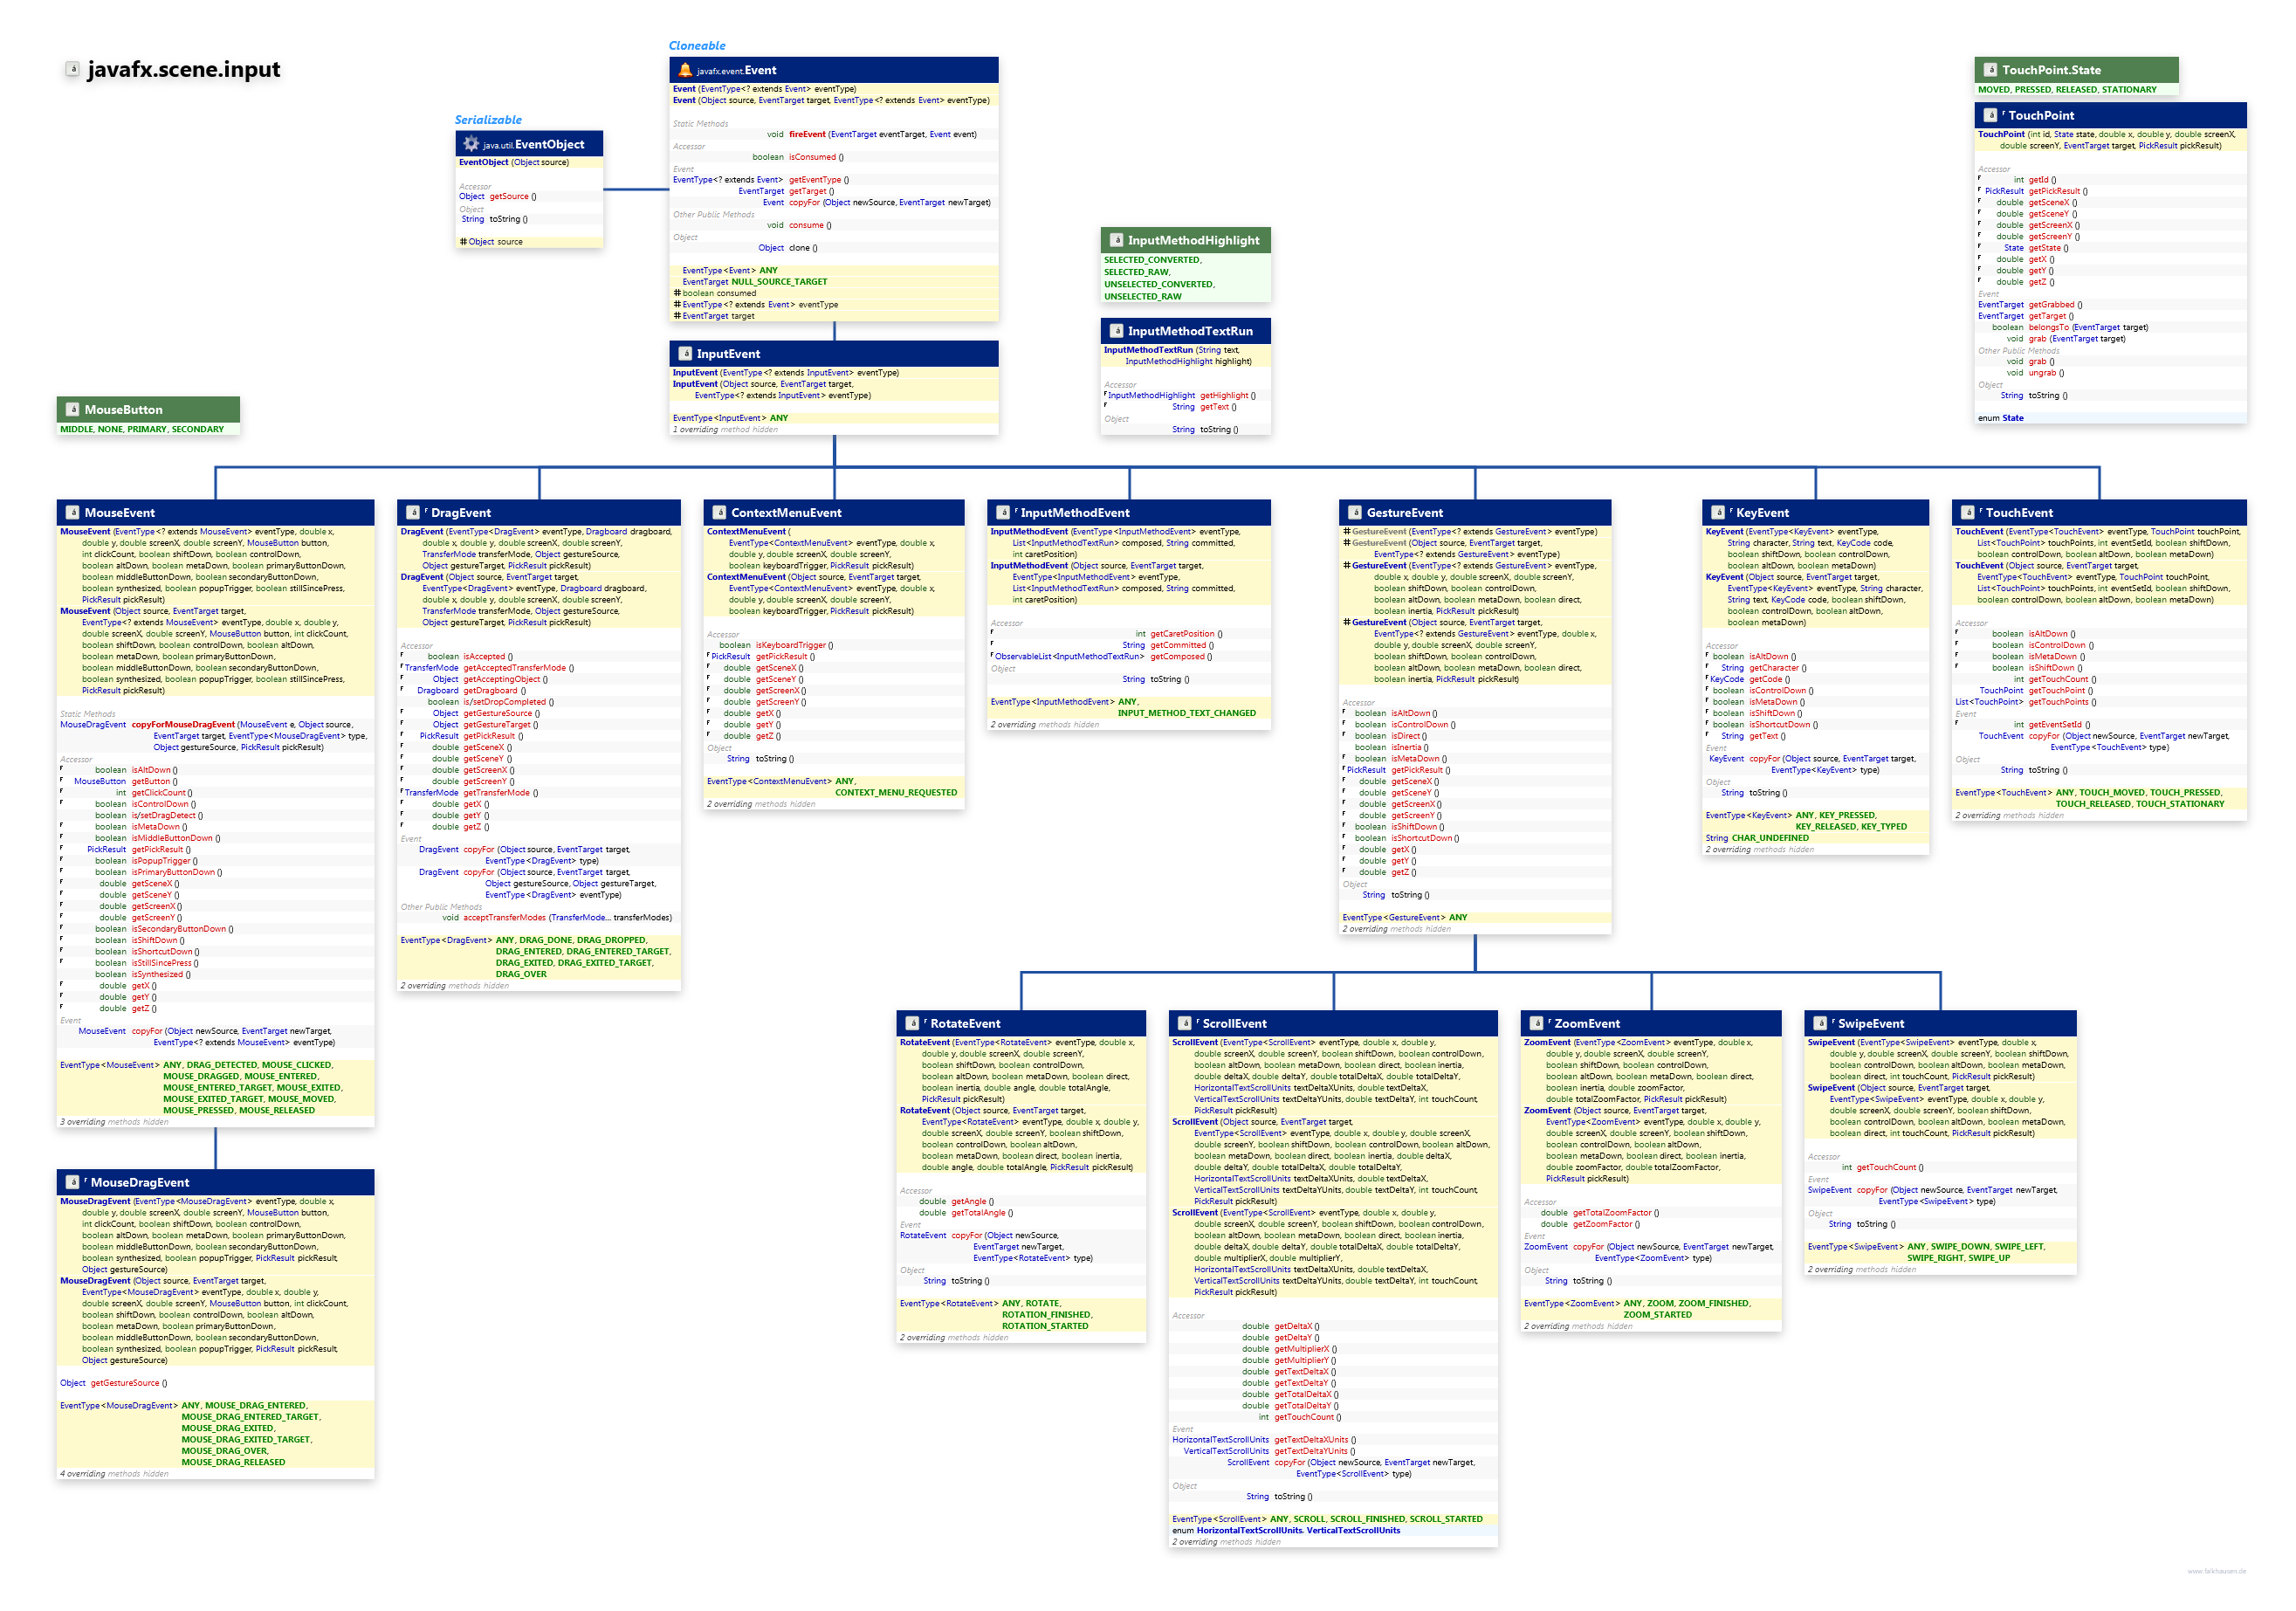 javafx.scene.input InputEvent class diagram and api documentation for JavaFX 10